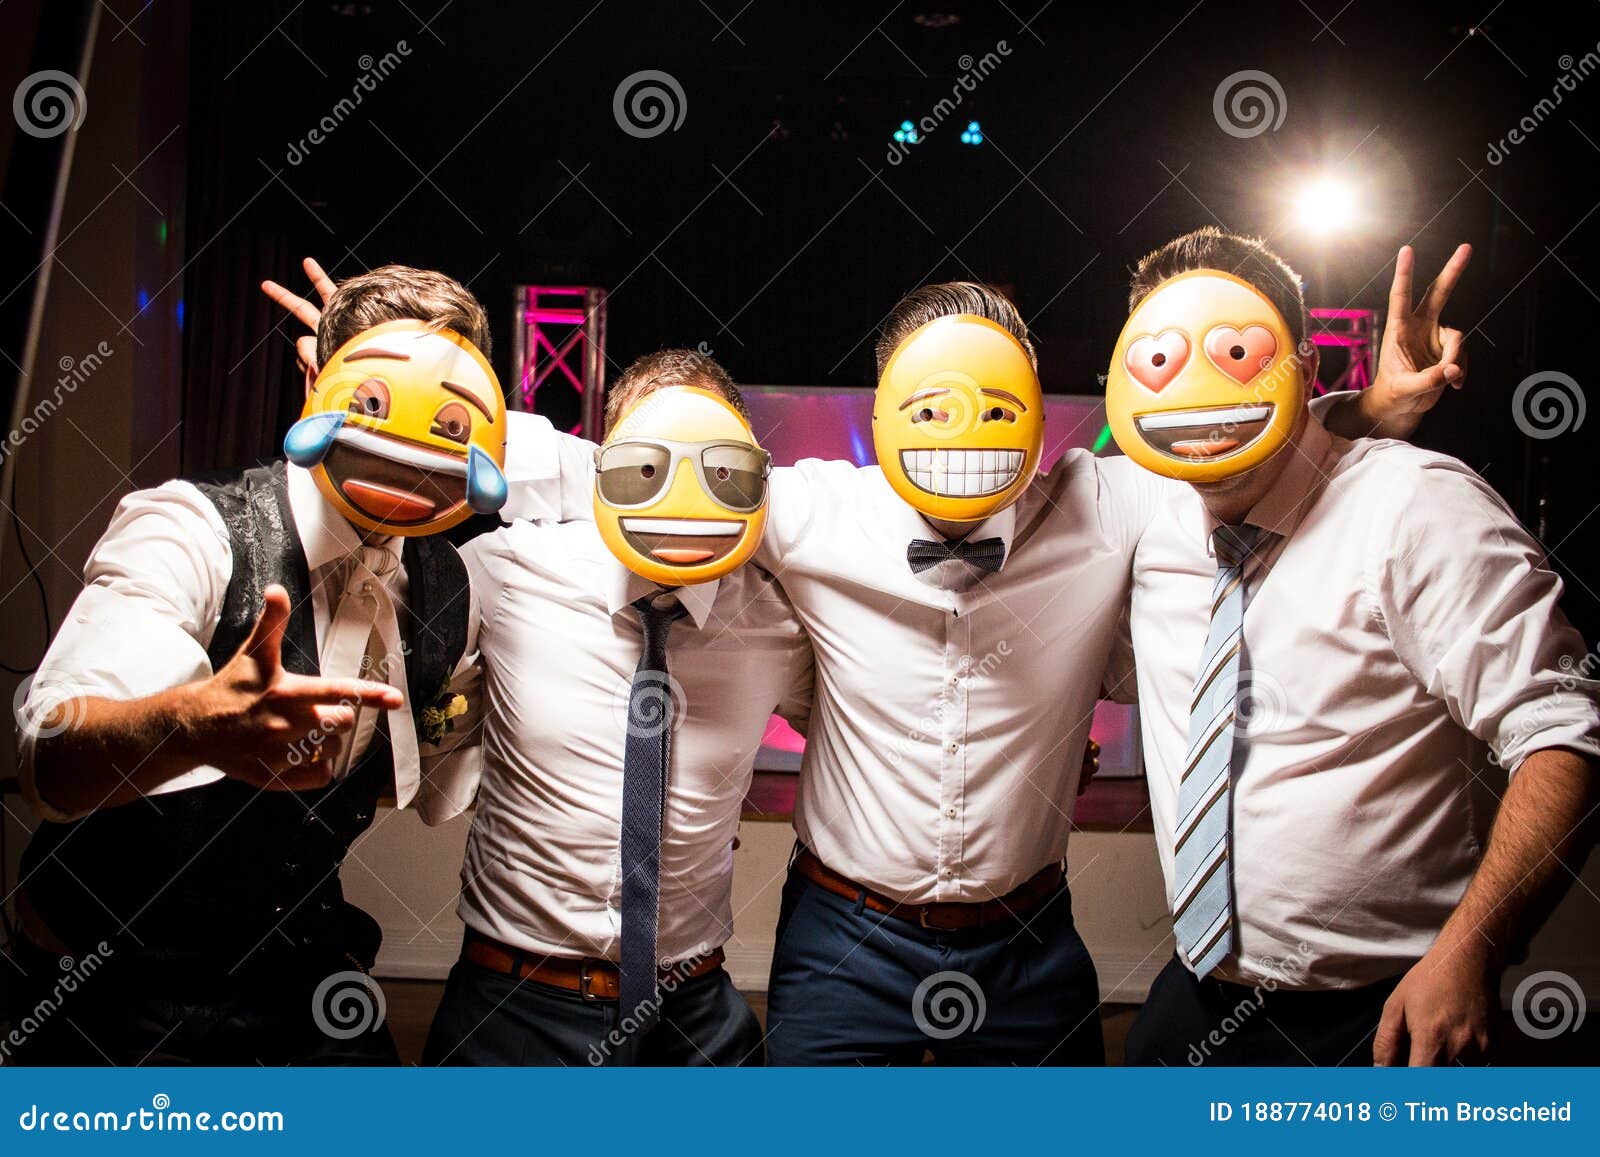 selfie friends group bachelor party men emoji mask